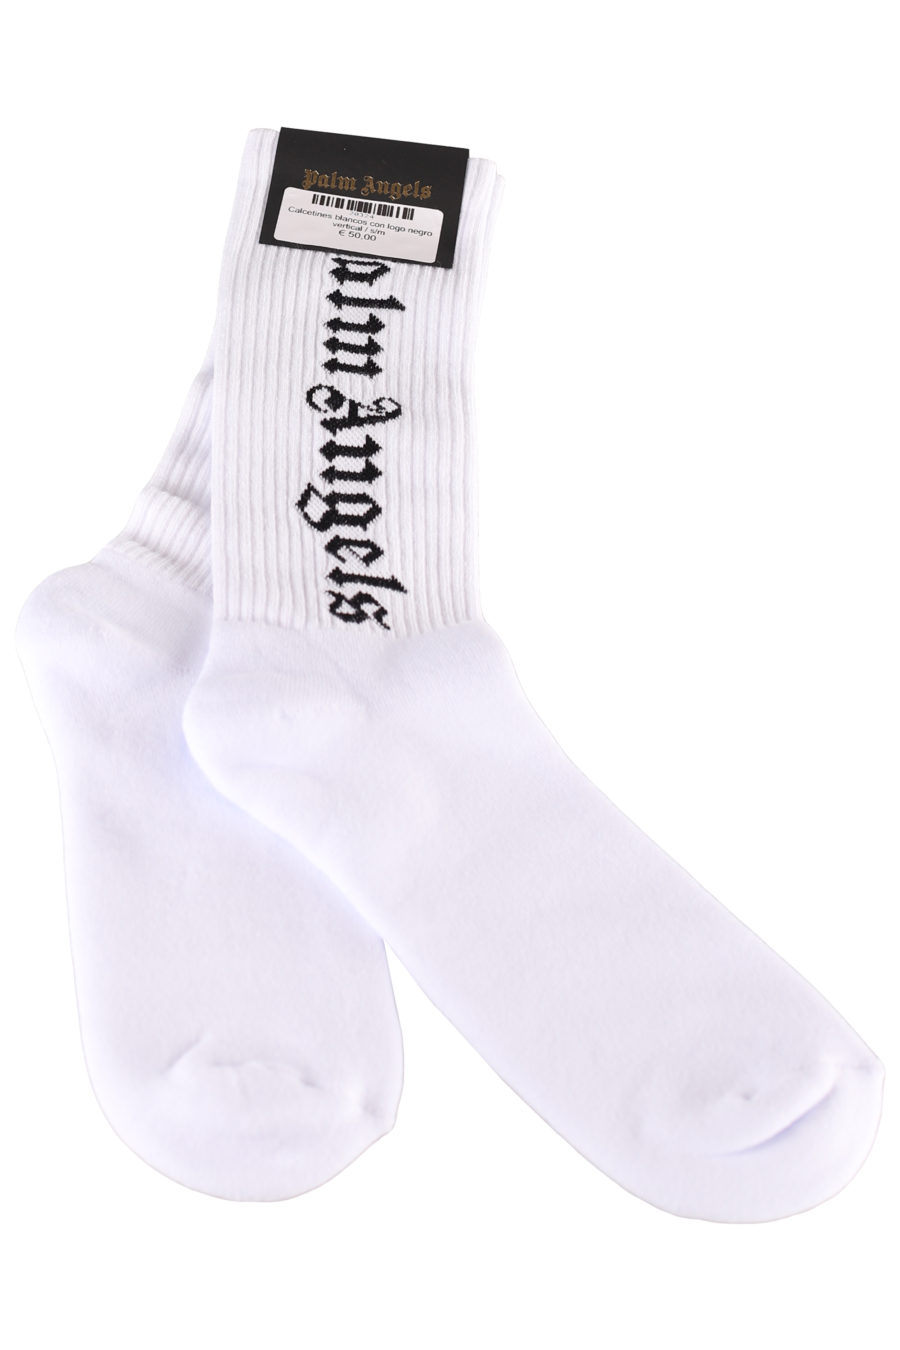 Calcetines blancos con logo negro vertical - IMG 7346